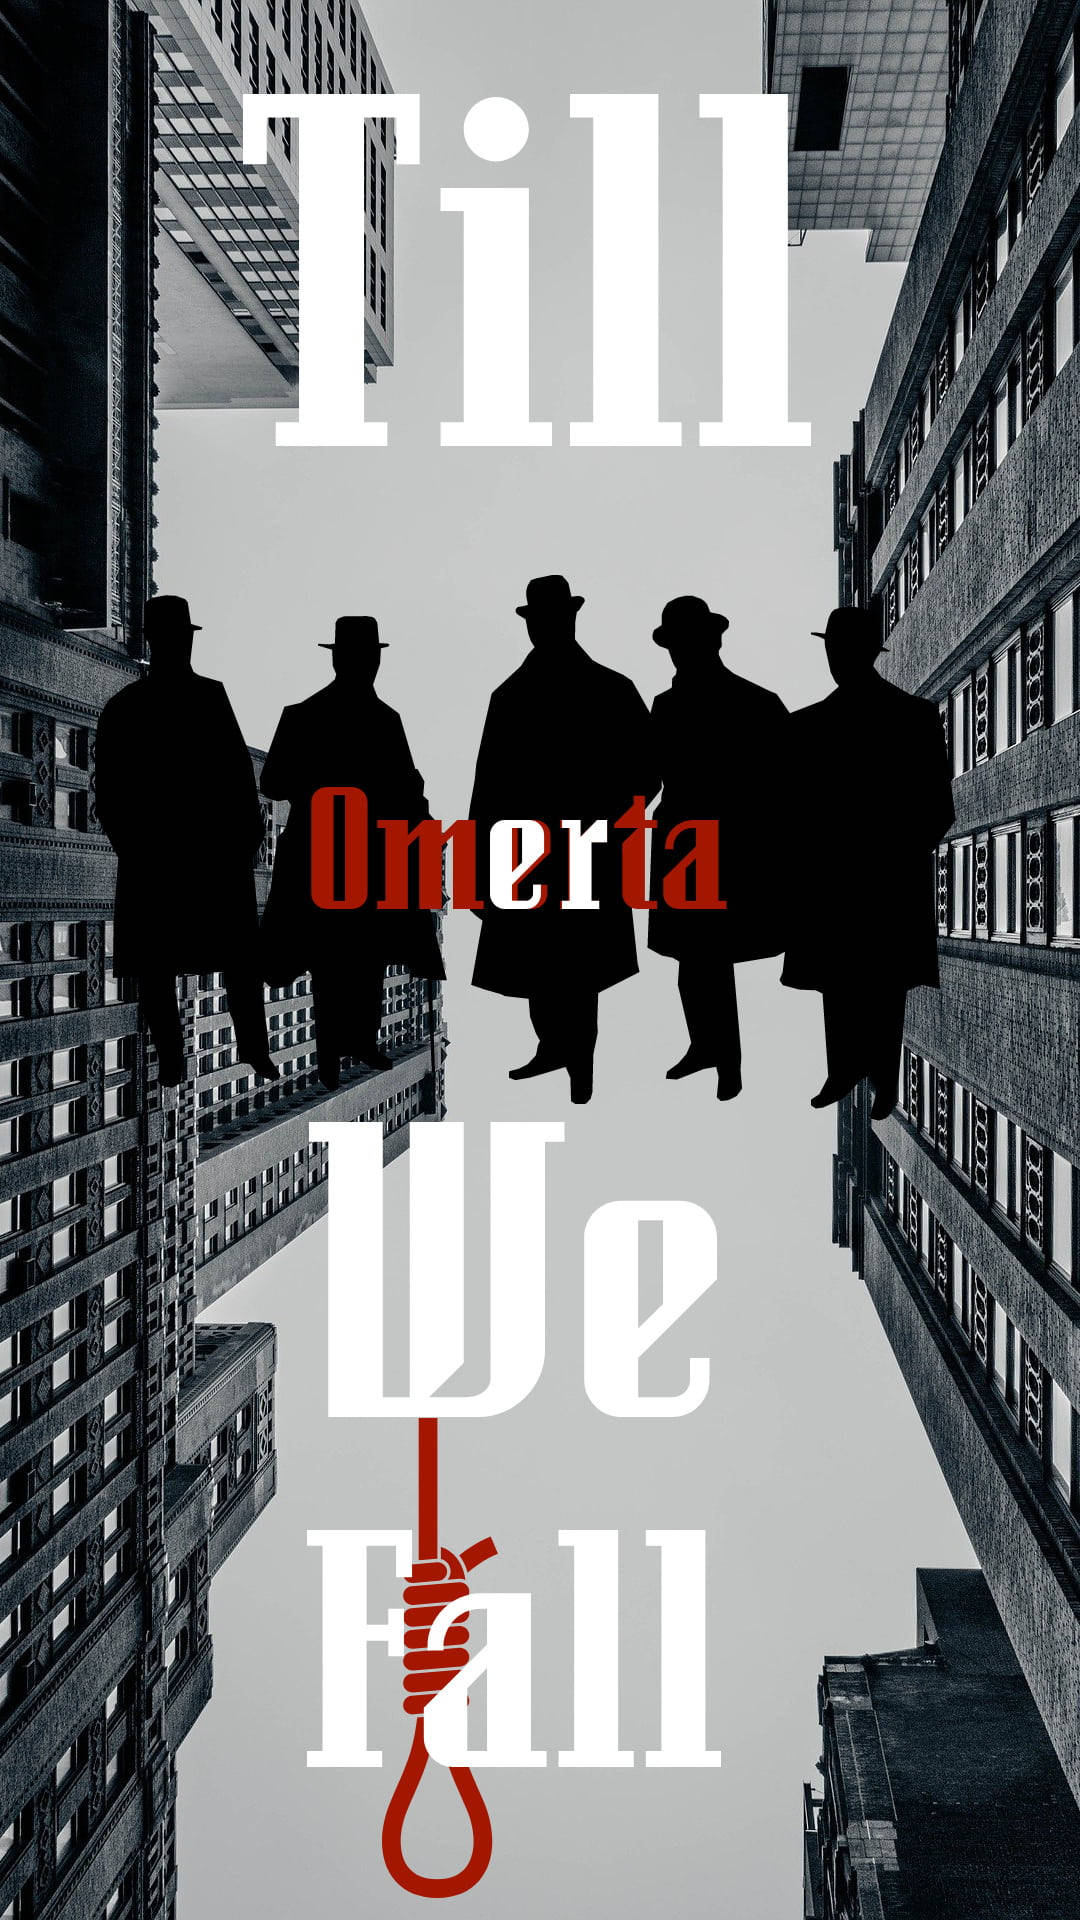 Omerta From Italian Mafia